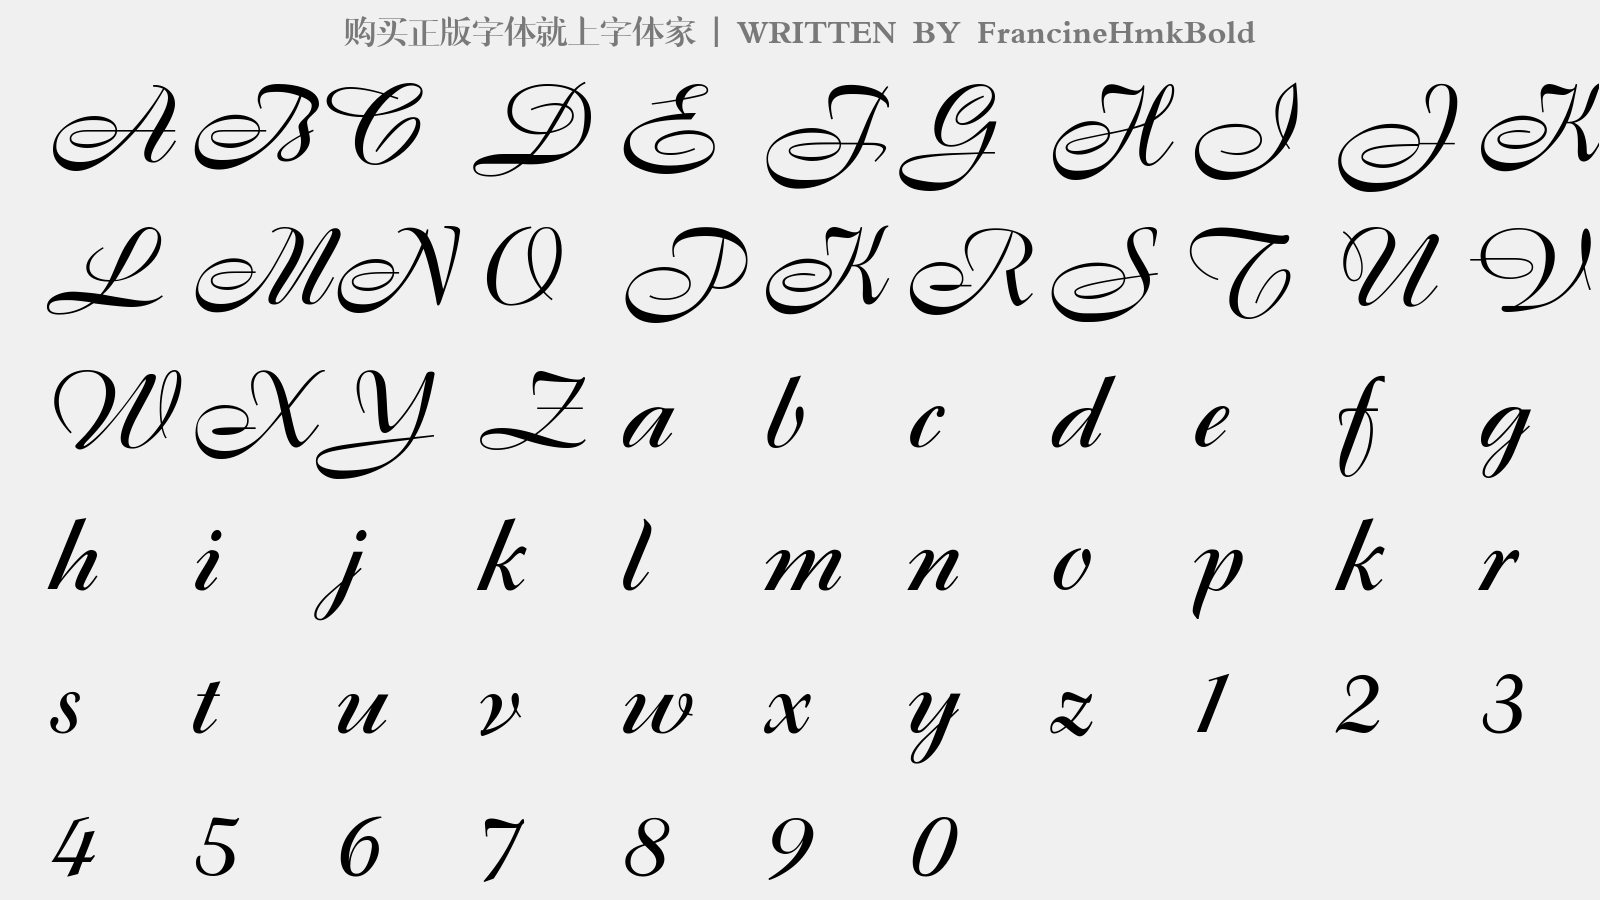 FrancineHmkBold - 大写字母/小写字母/数字